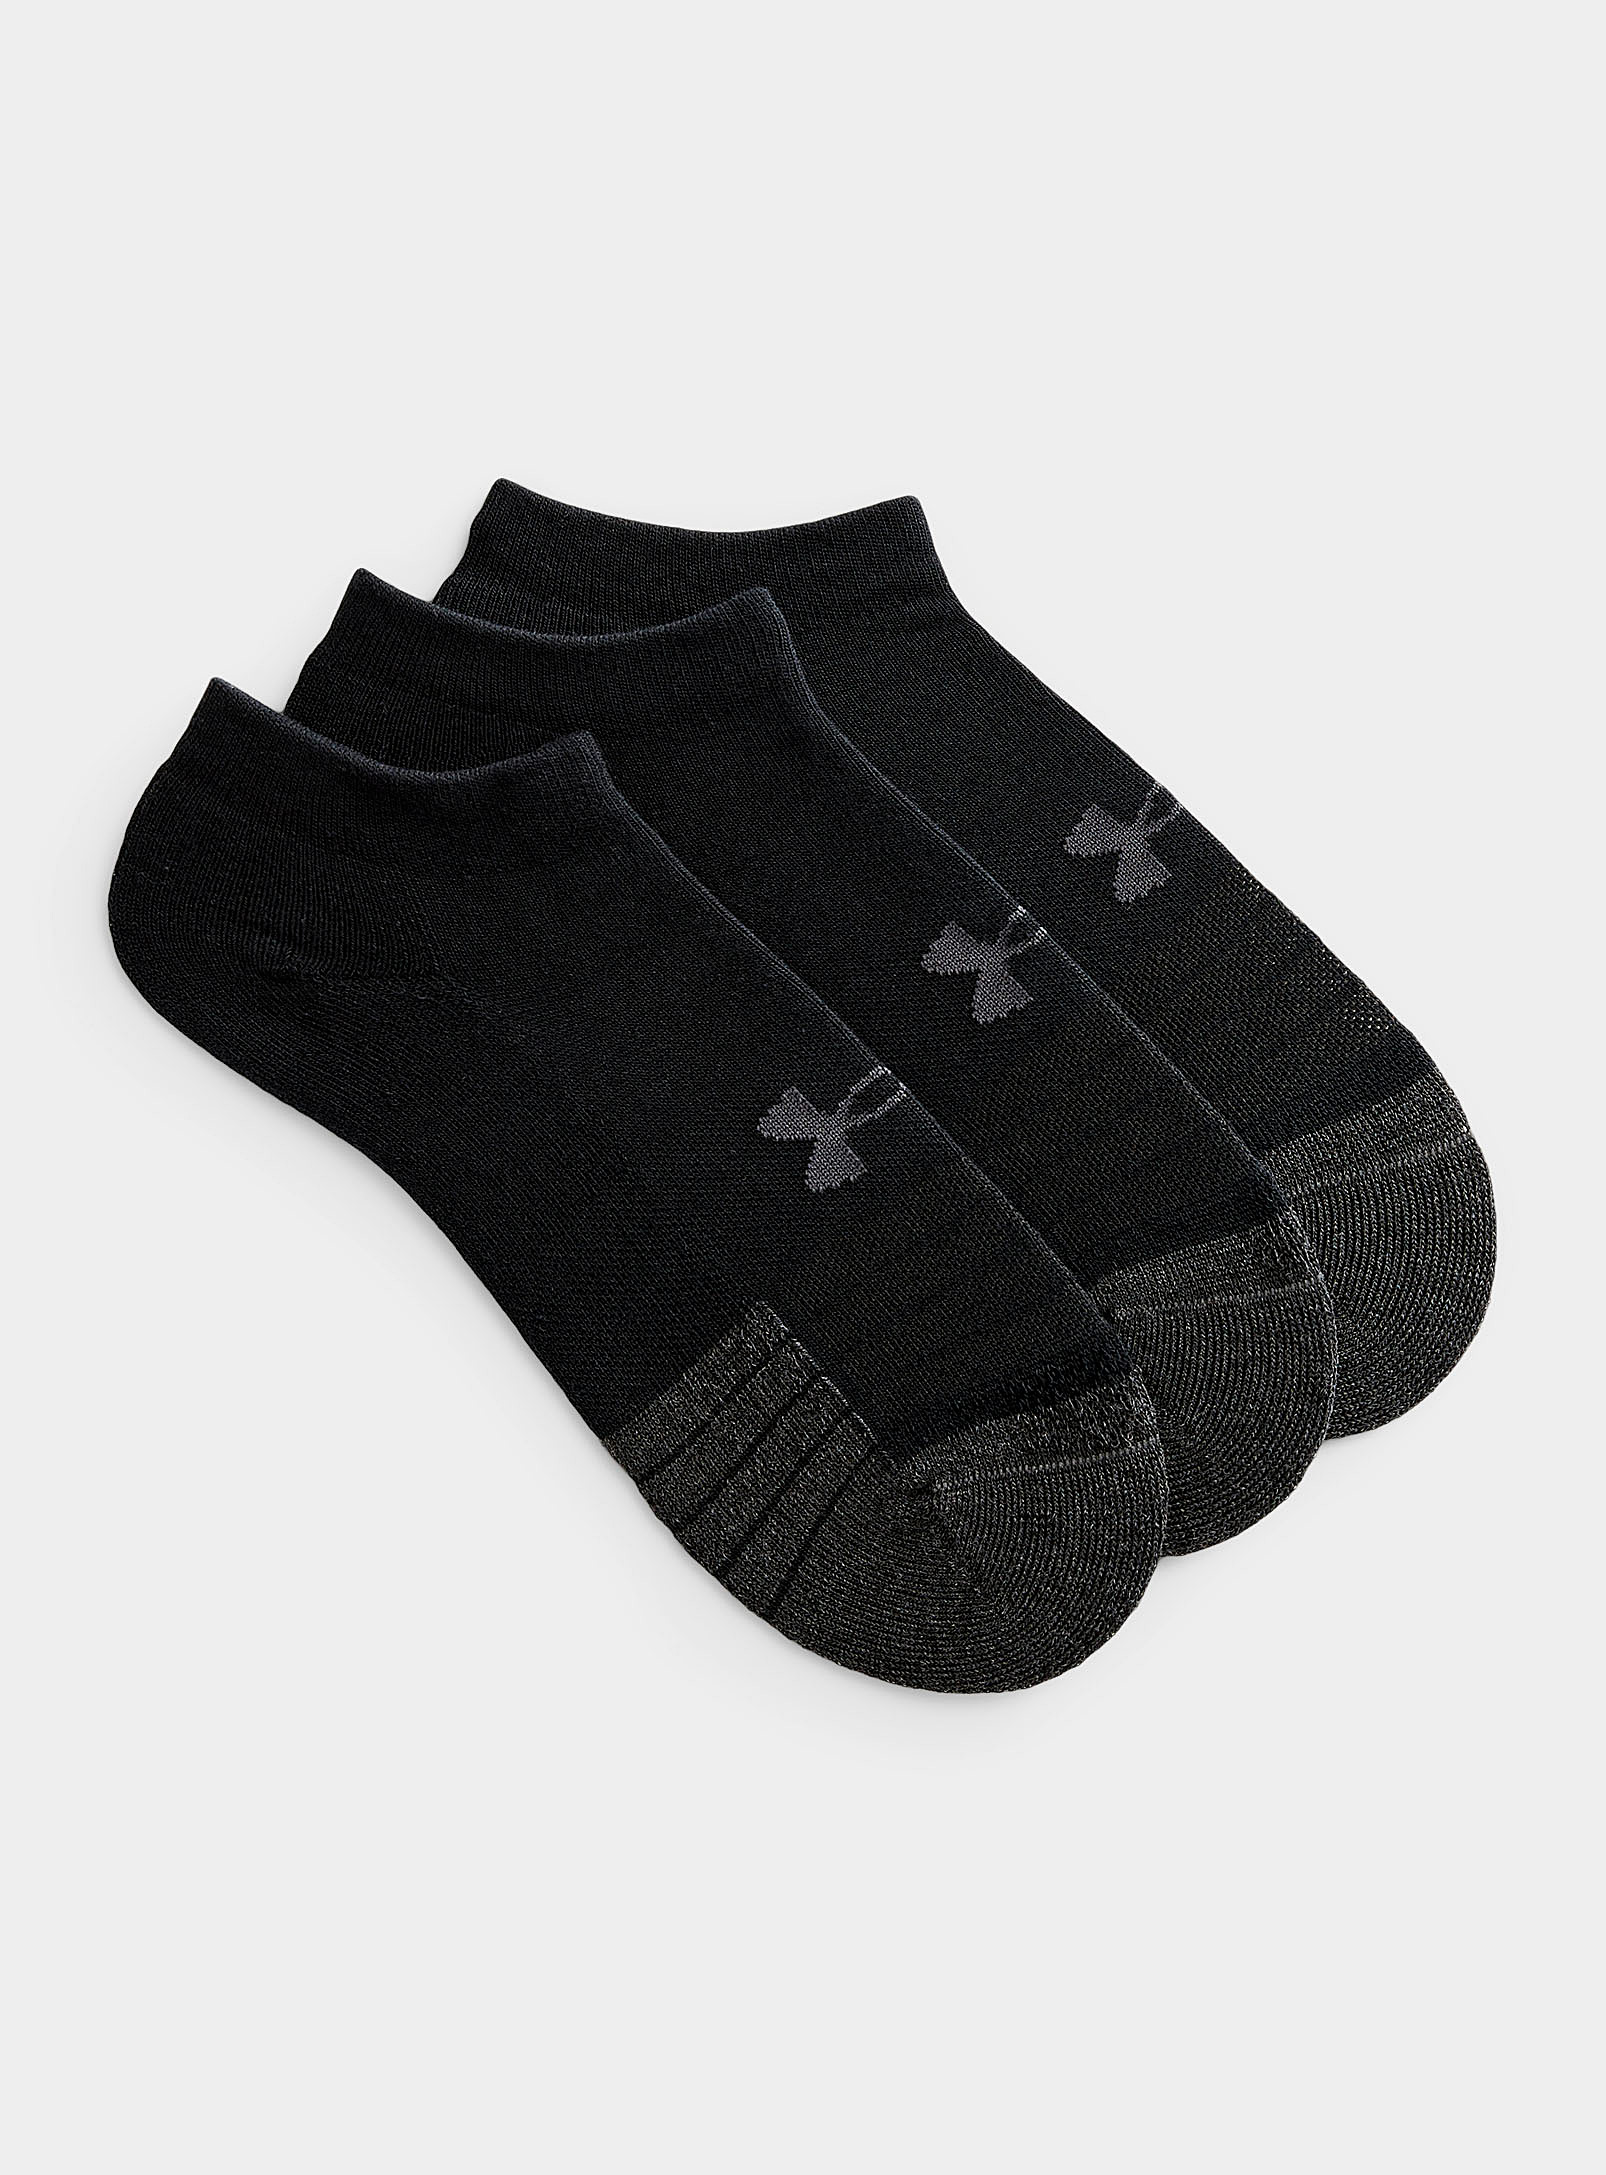 Under Armour Ua Performance Training Ped Socks Set Of 3 In Black